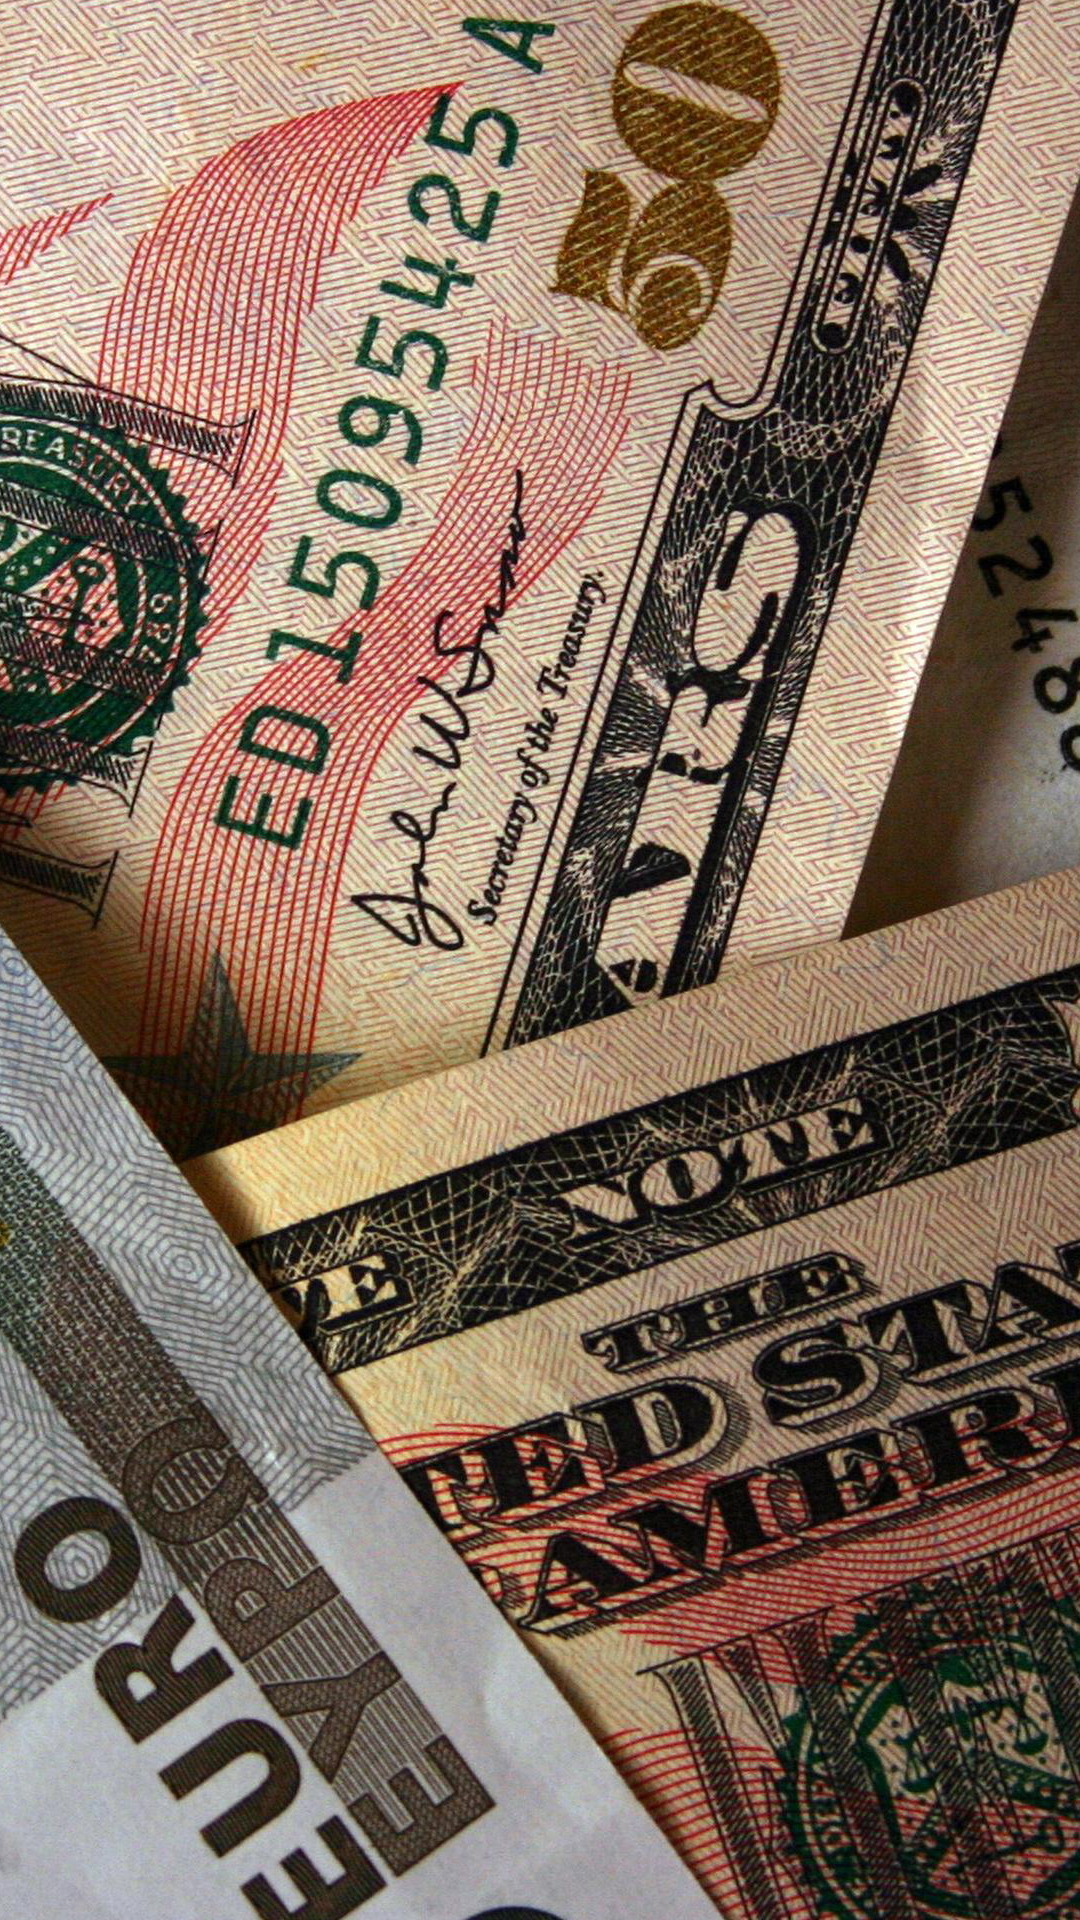 Money Bag iPhone Wallpaper HD  iPhone Wallpapers